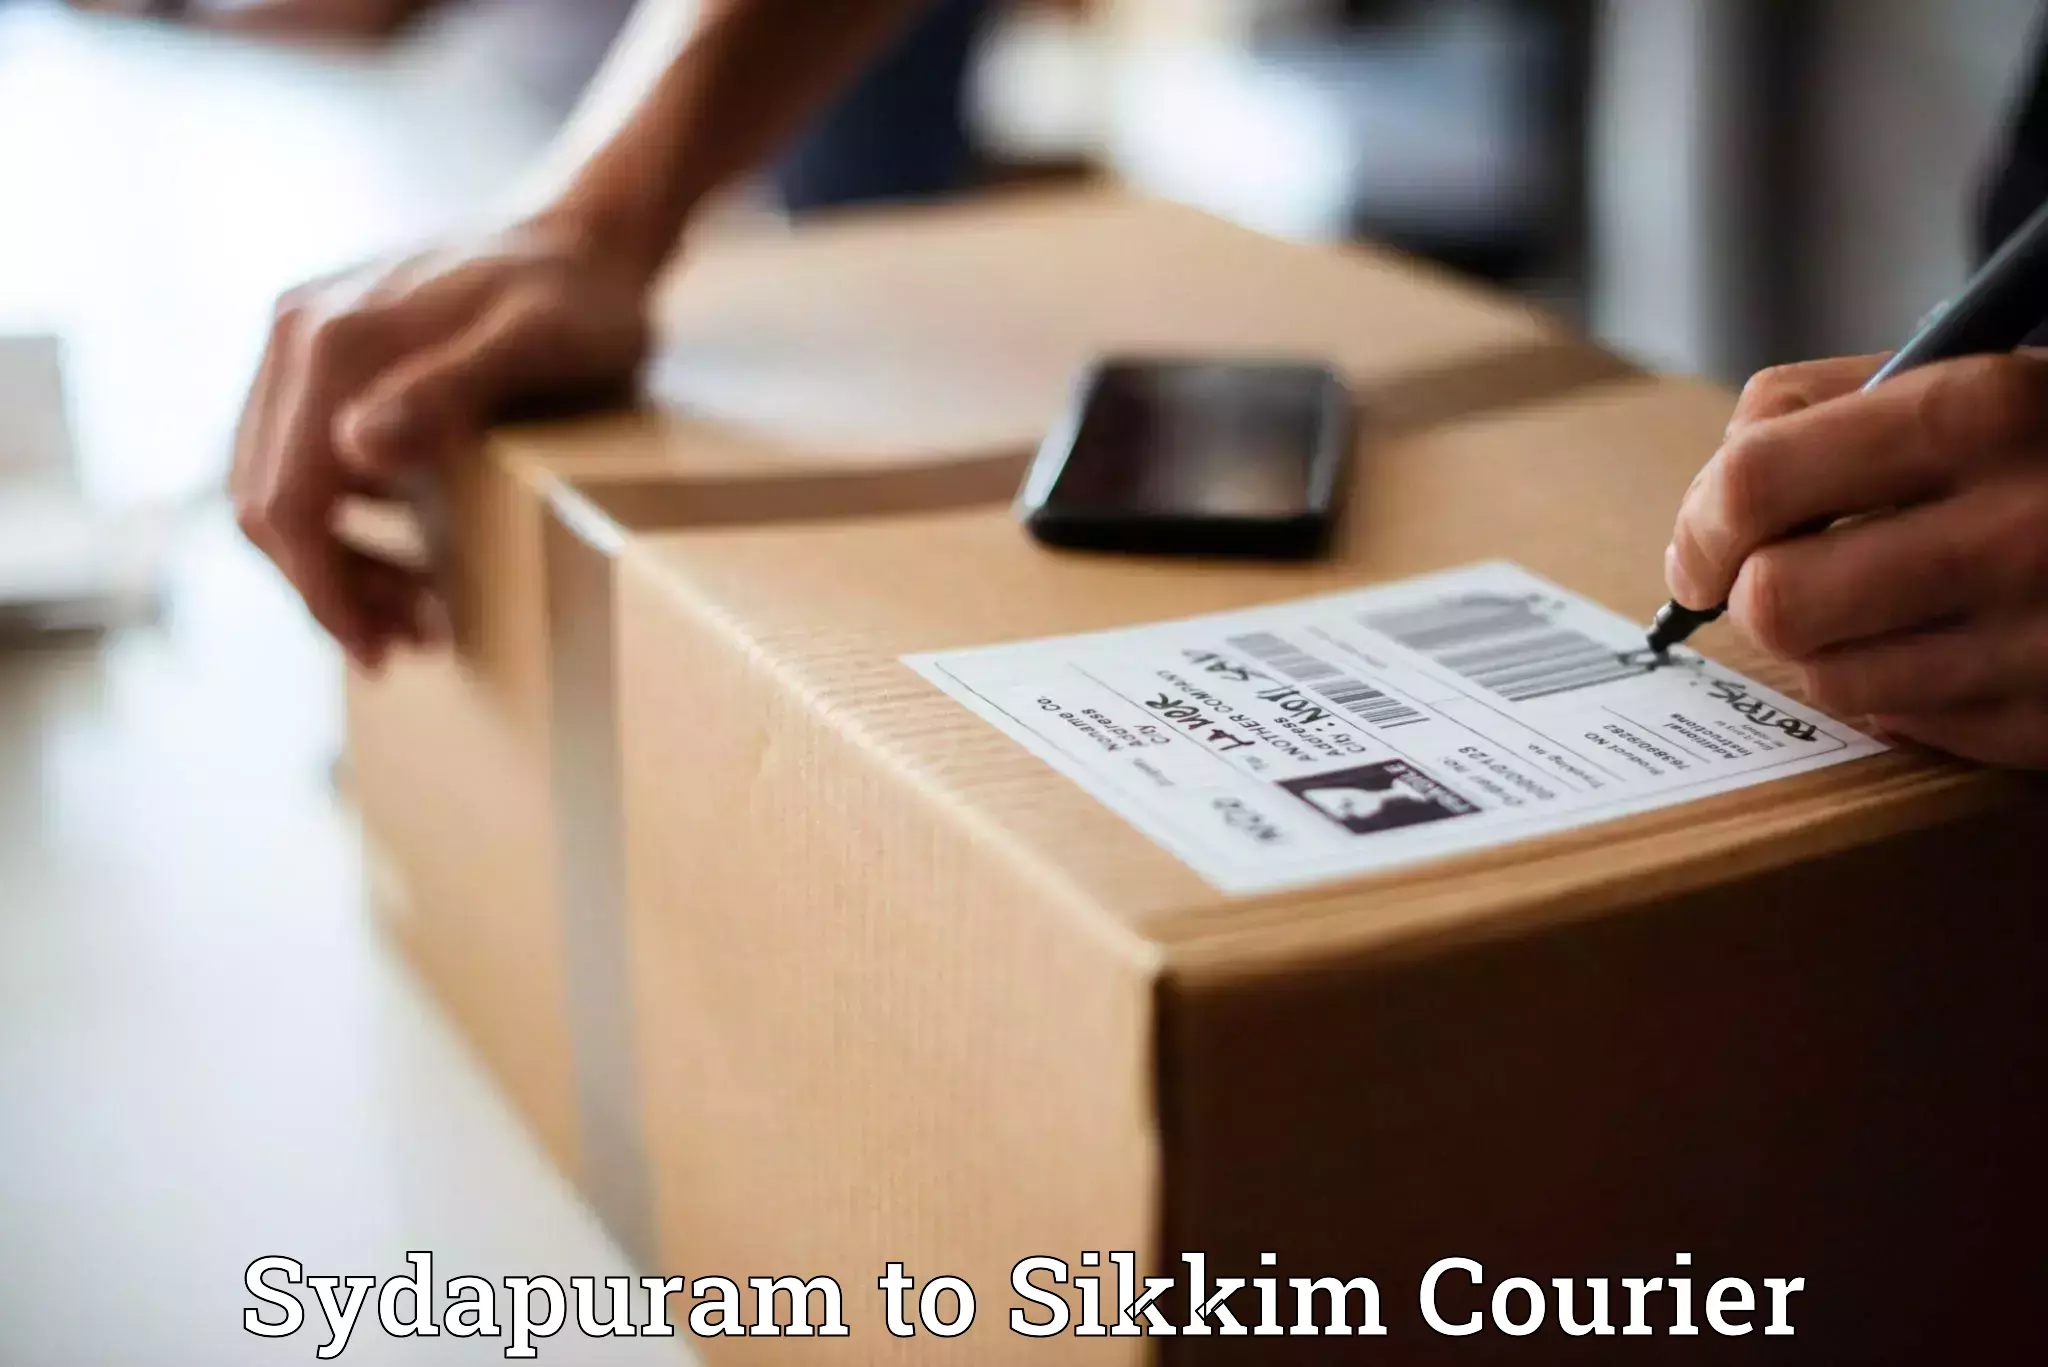 Quick dispatch service Sydapuram to Pelling